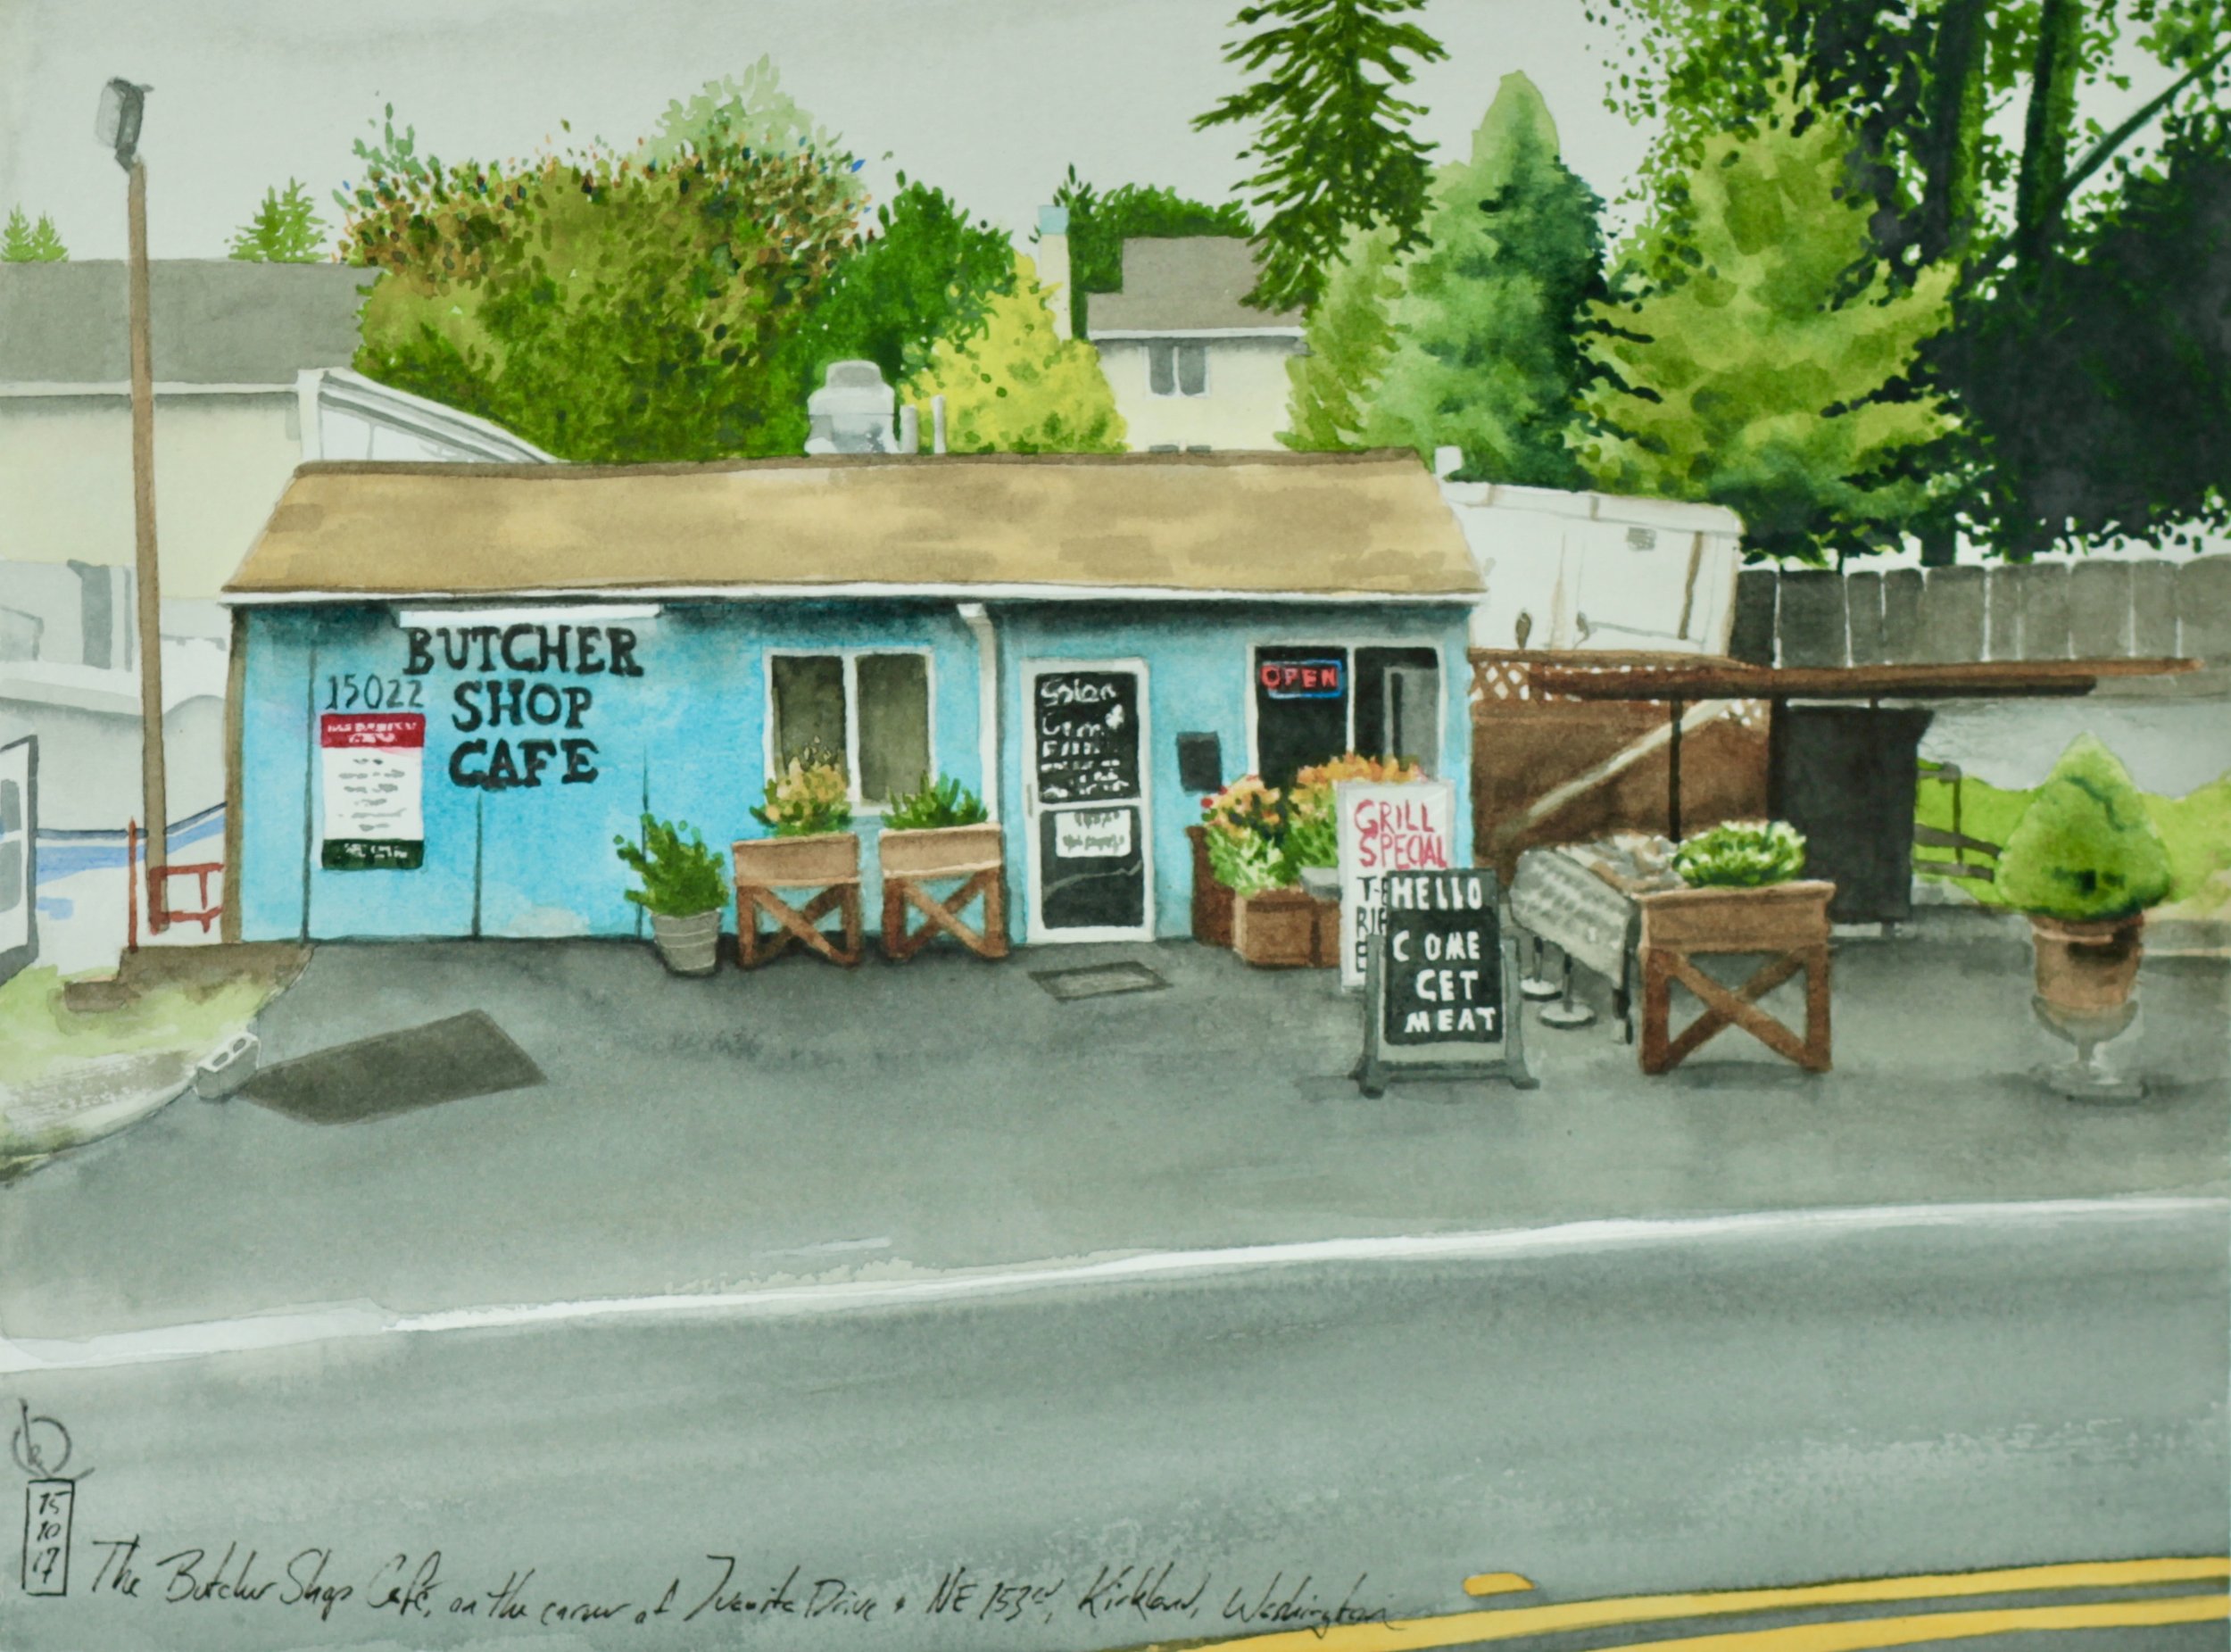 The Butcher Shop Cafe, on the corner of Juanita Drive and NE 153rd, Kirkland, Washington